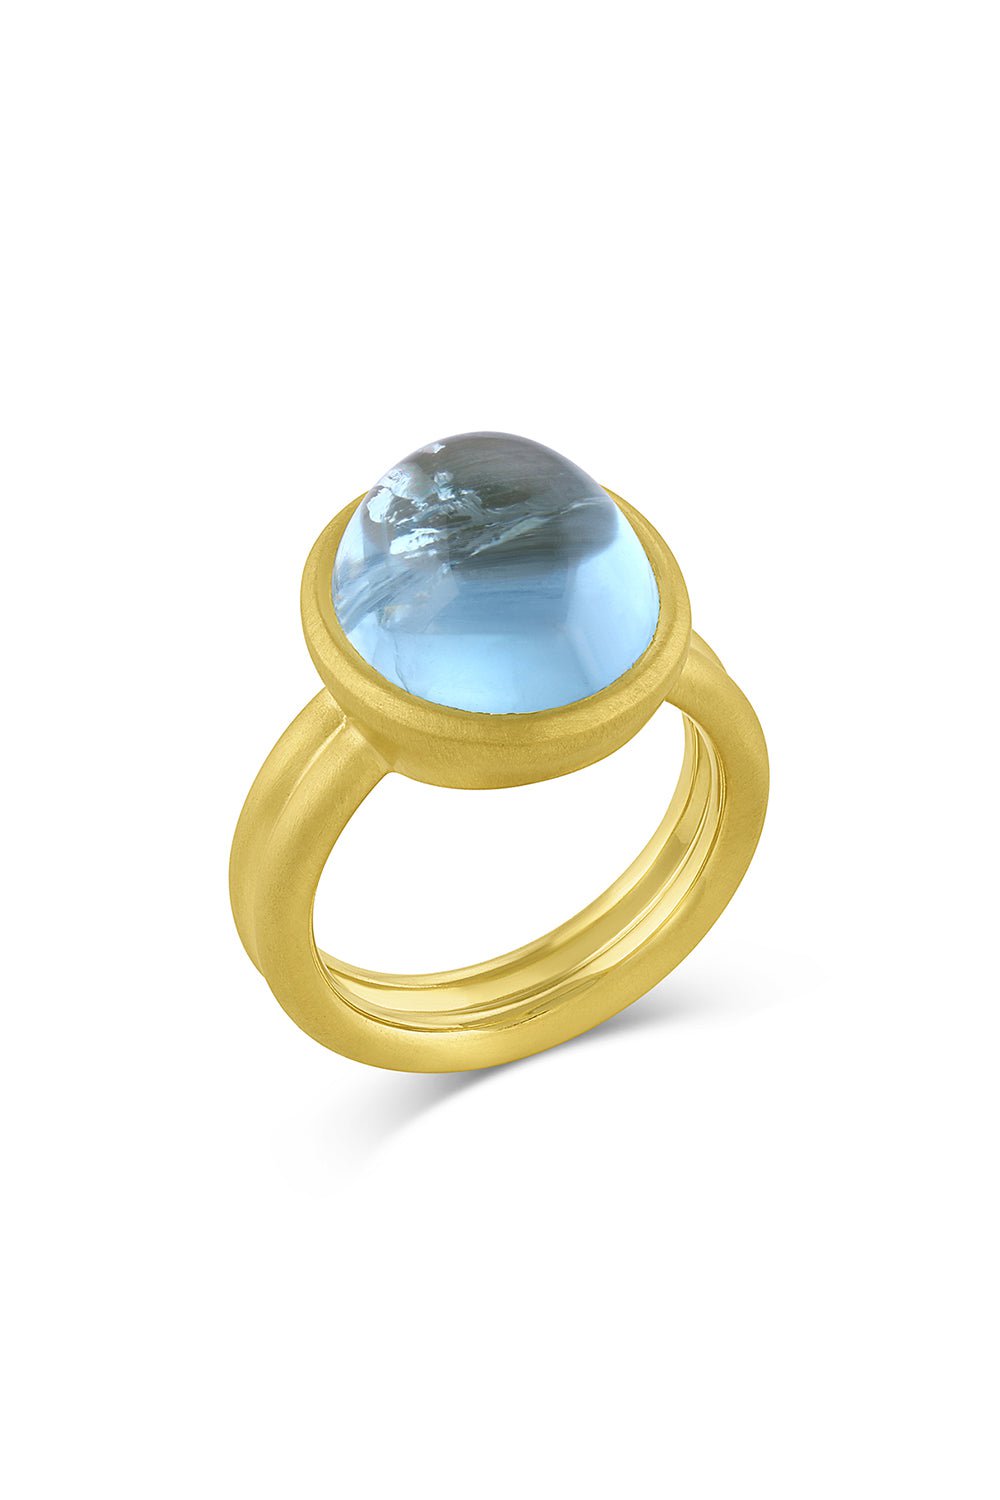 LEIGH MAXWELL-Puffed Aquamarine Cabochon Ring-YELLOW GOLD